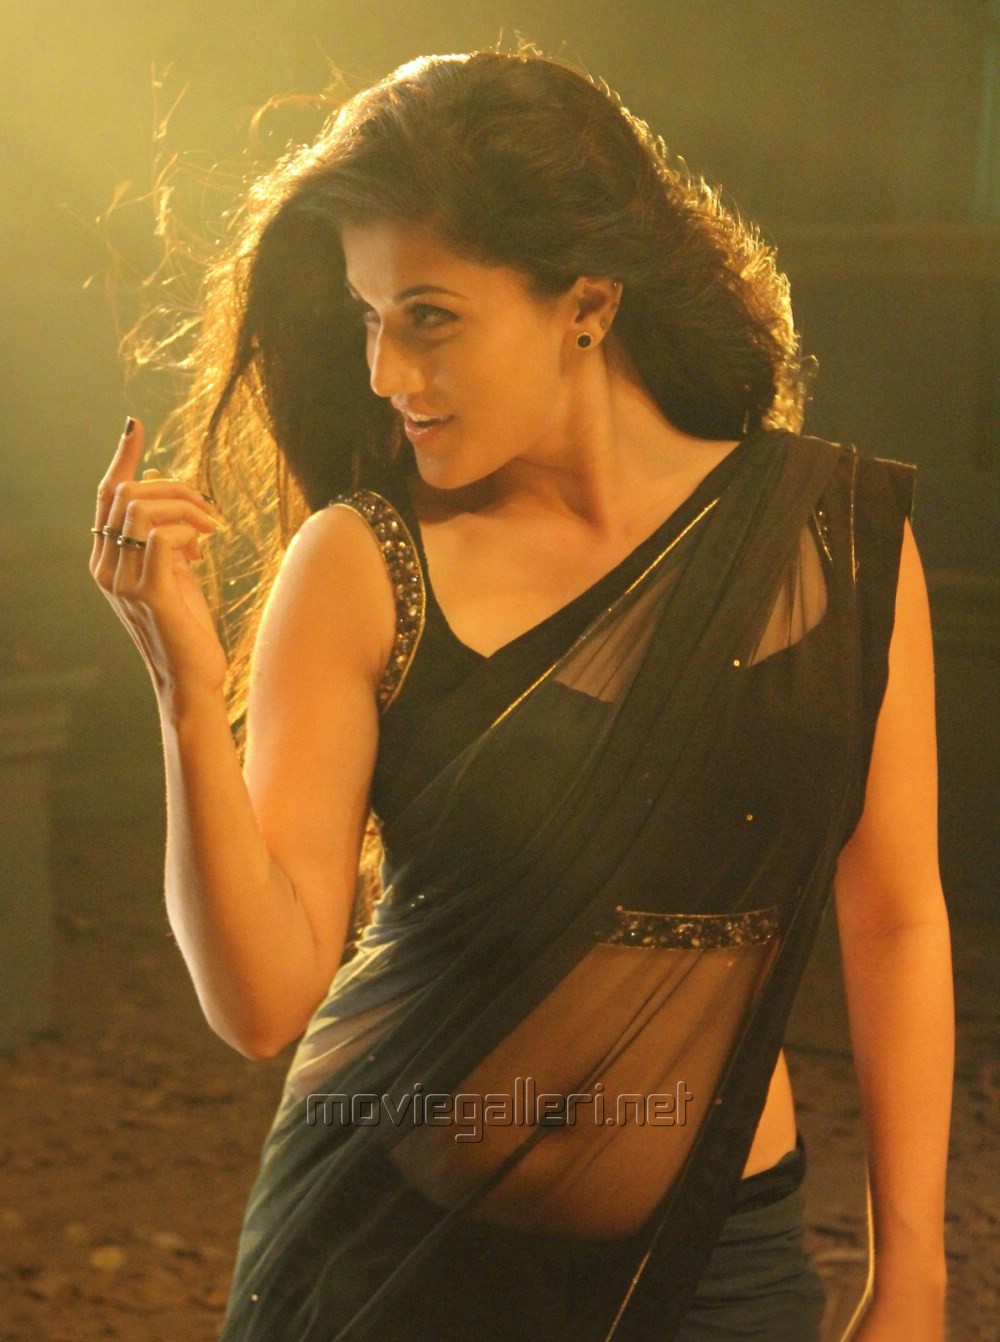 Actress Taapsee in Kanchana 2 Movie Photos